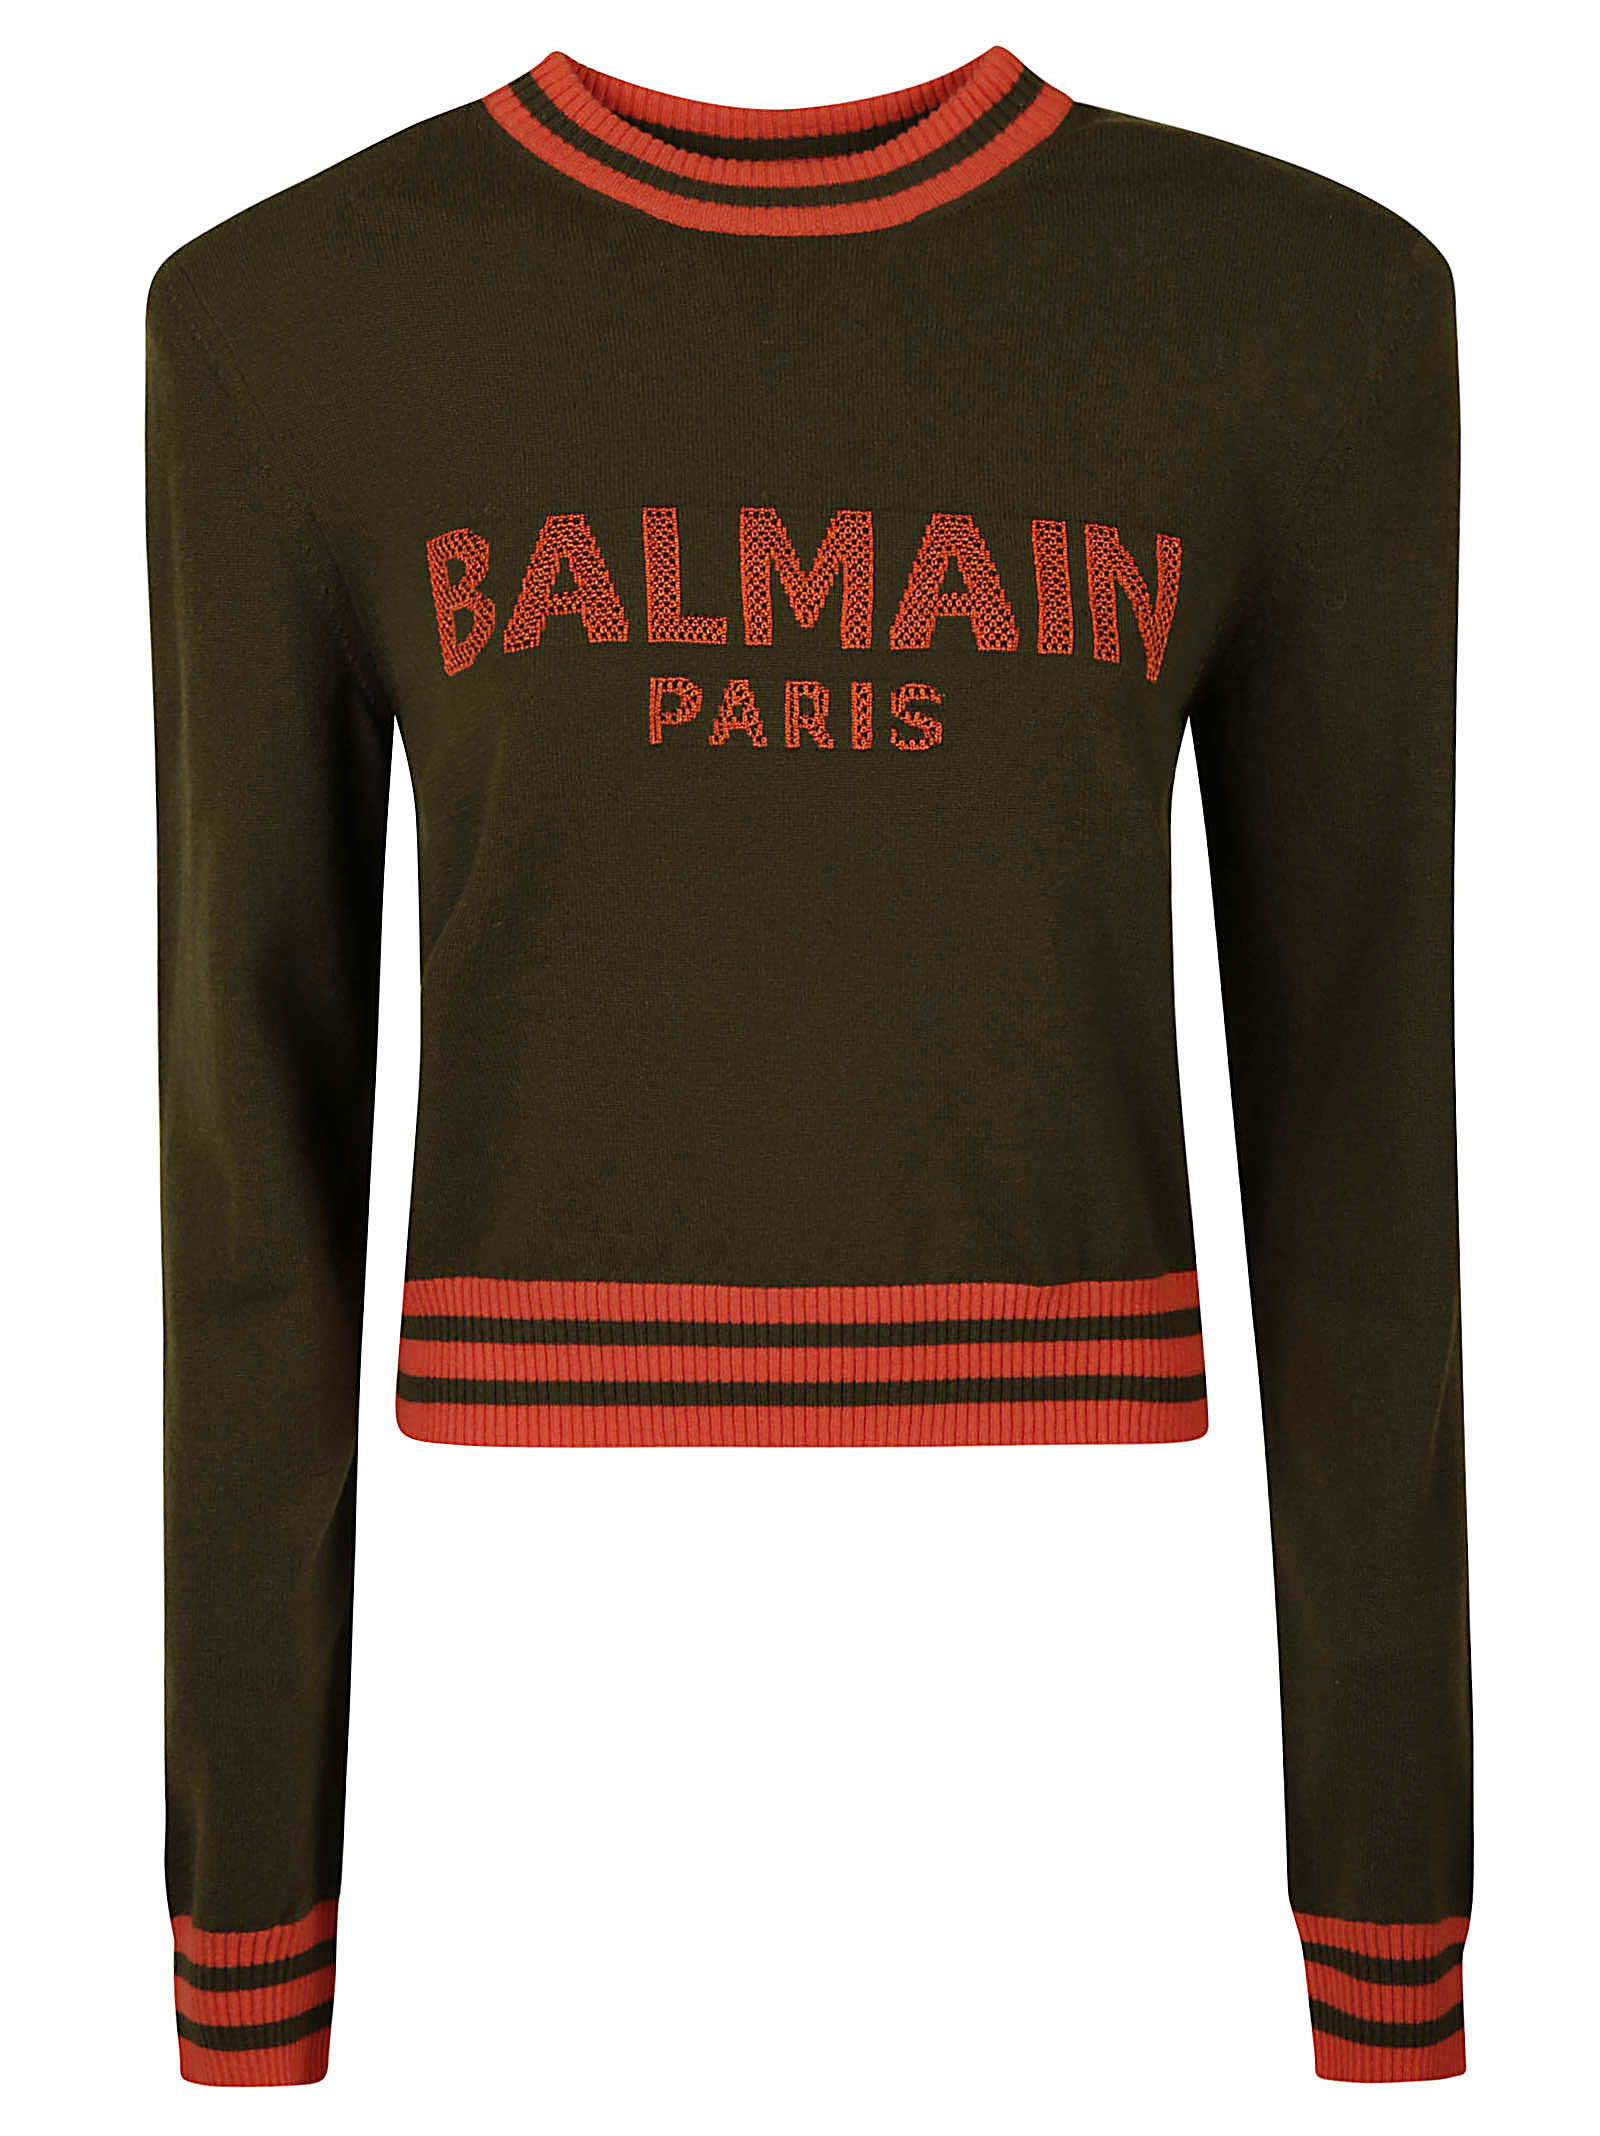 Balmain Logo Cropped Sweatshirt